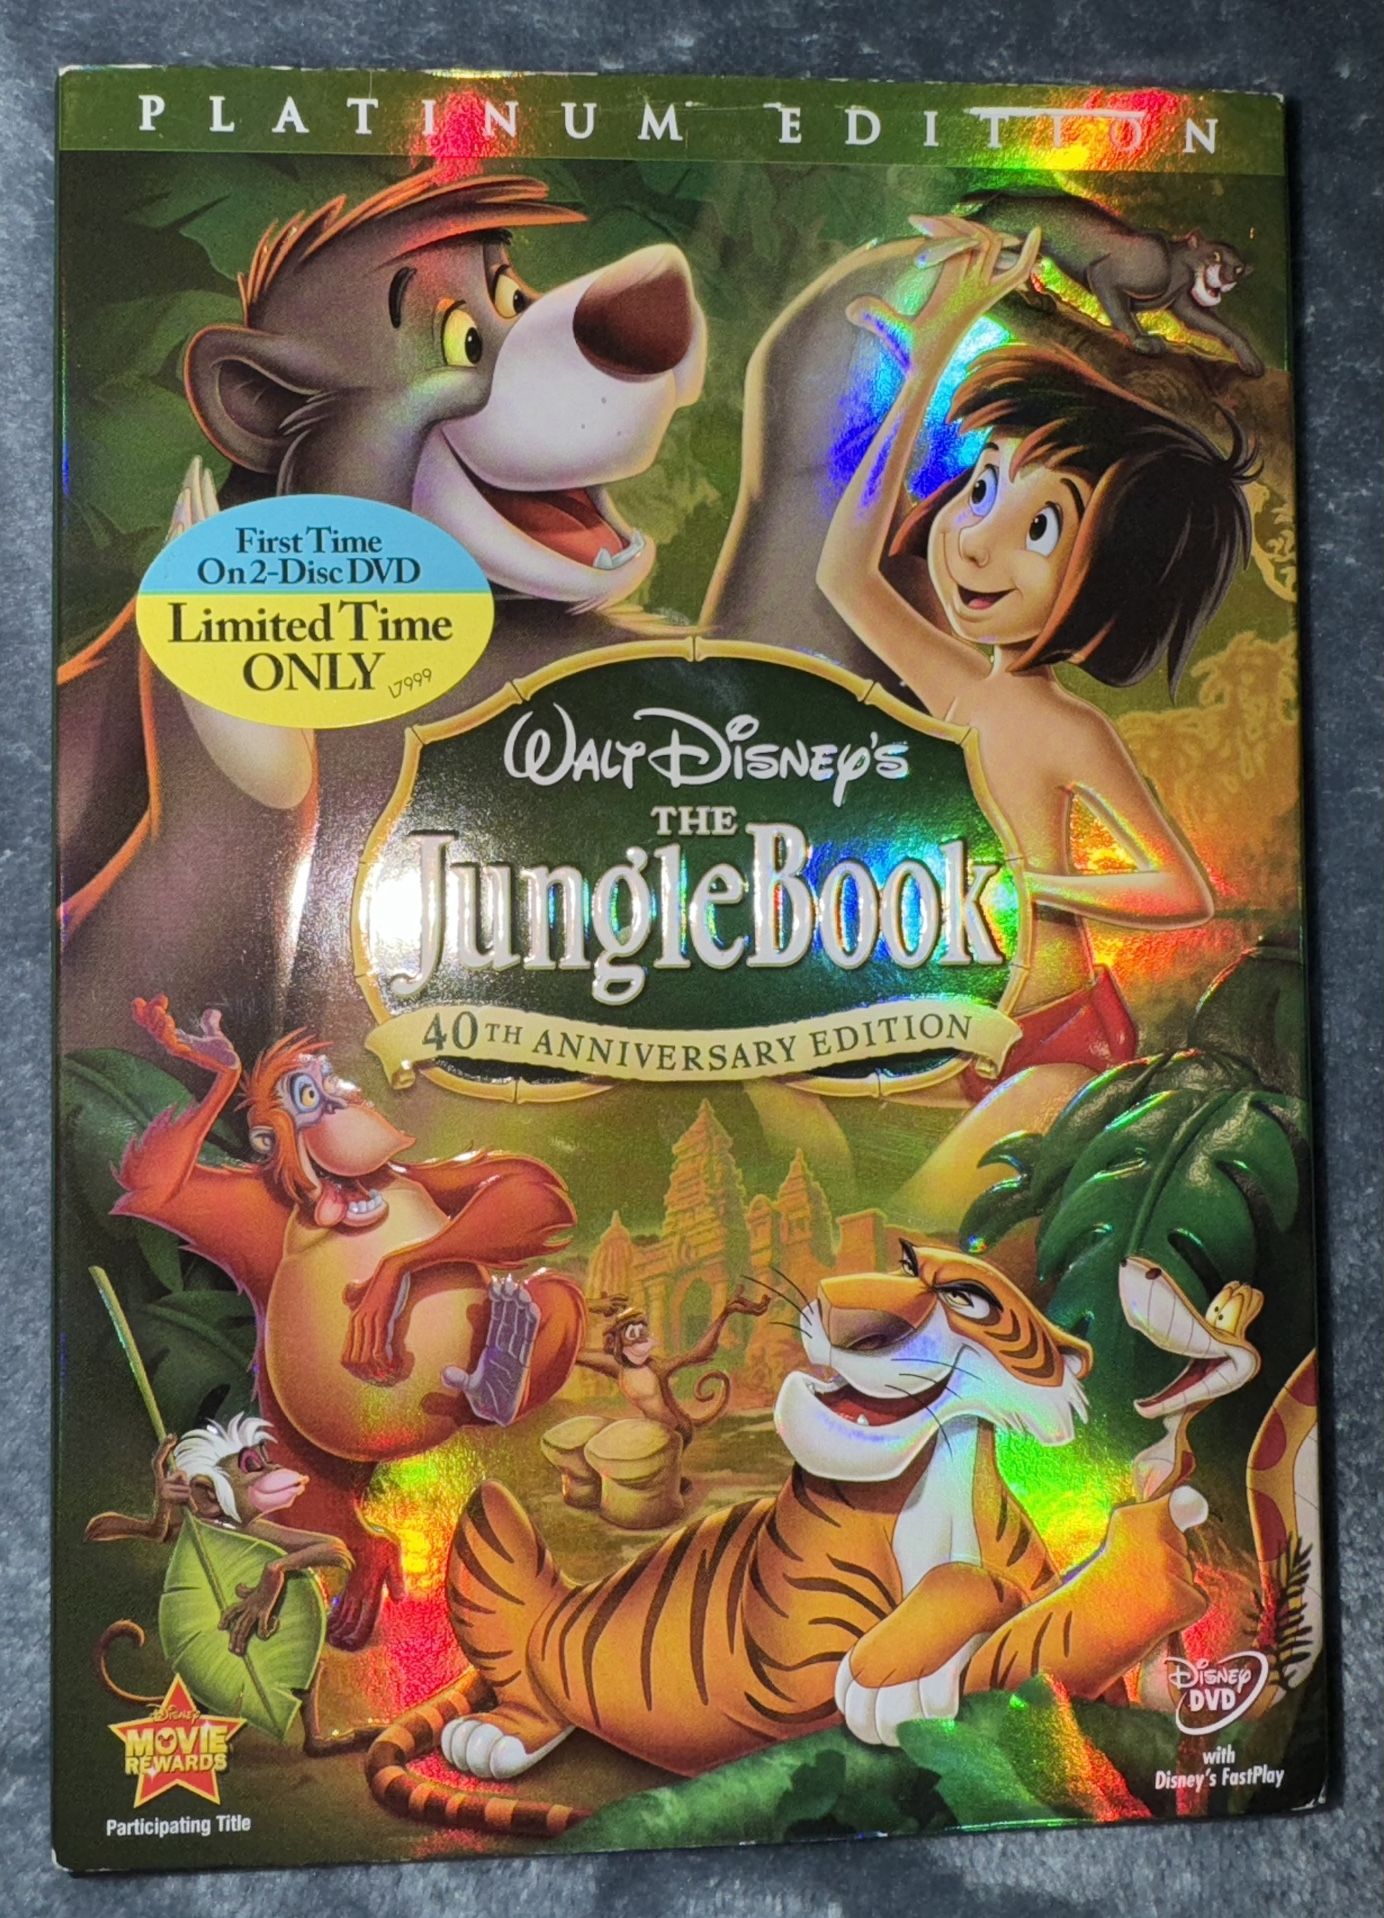 The Jungle Book Platinum Edition